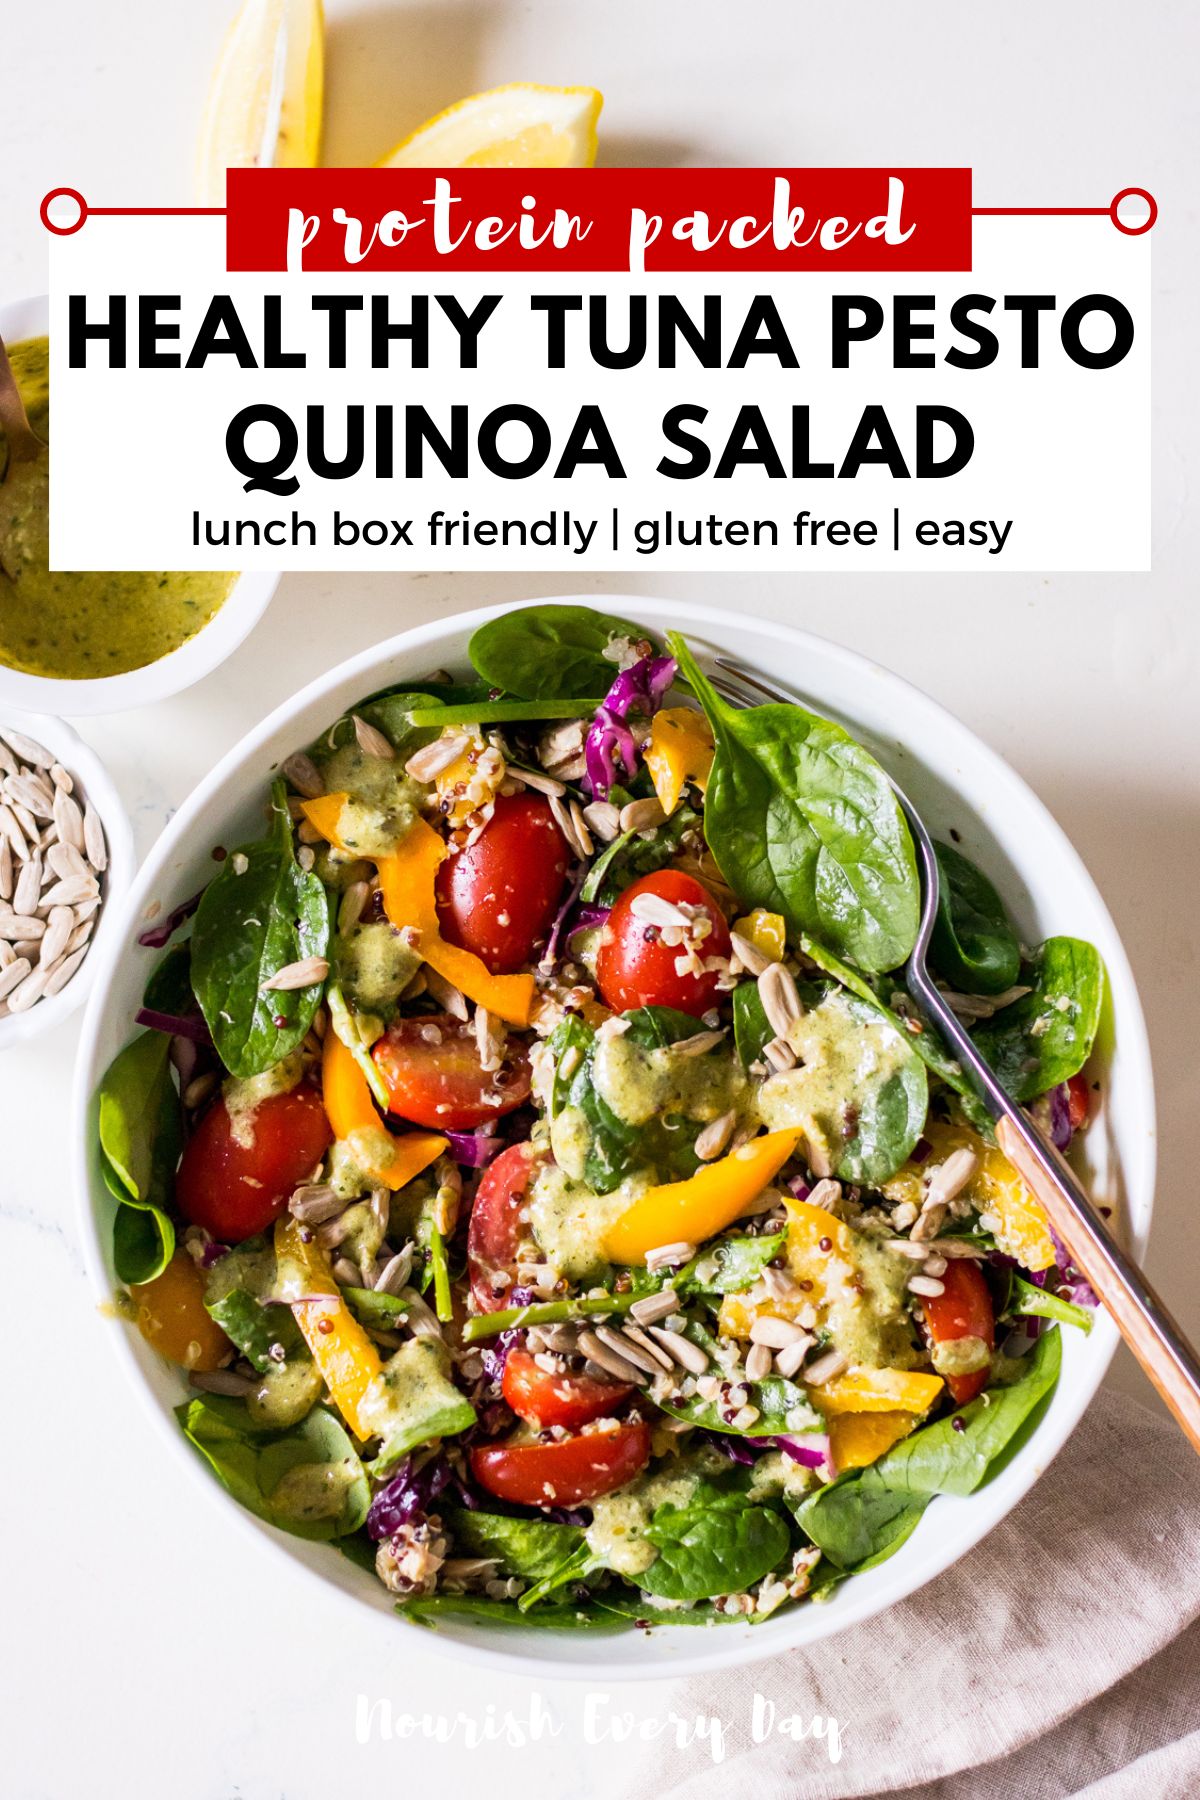 Tuna Pesto Quinoa Salad Recipe Pin by Nourish Everyday